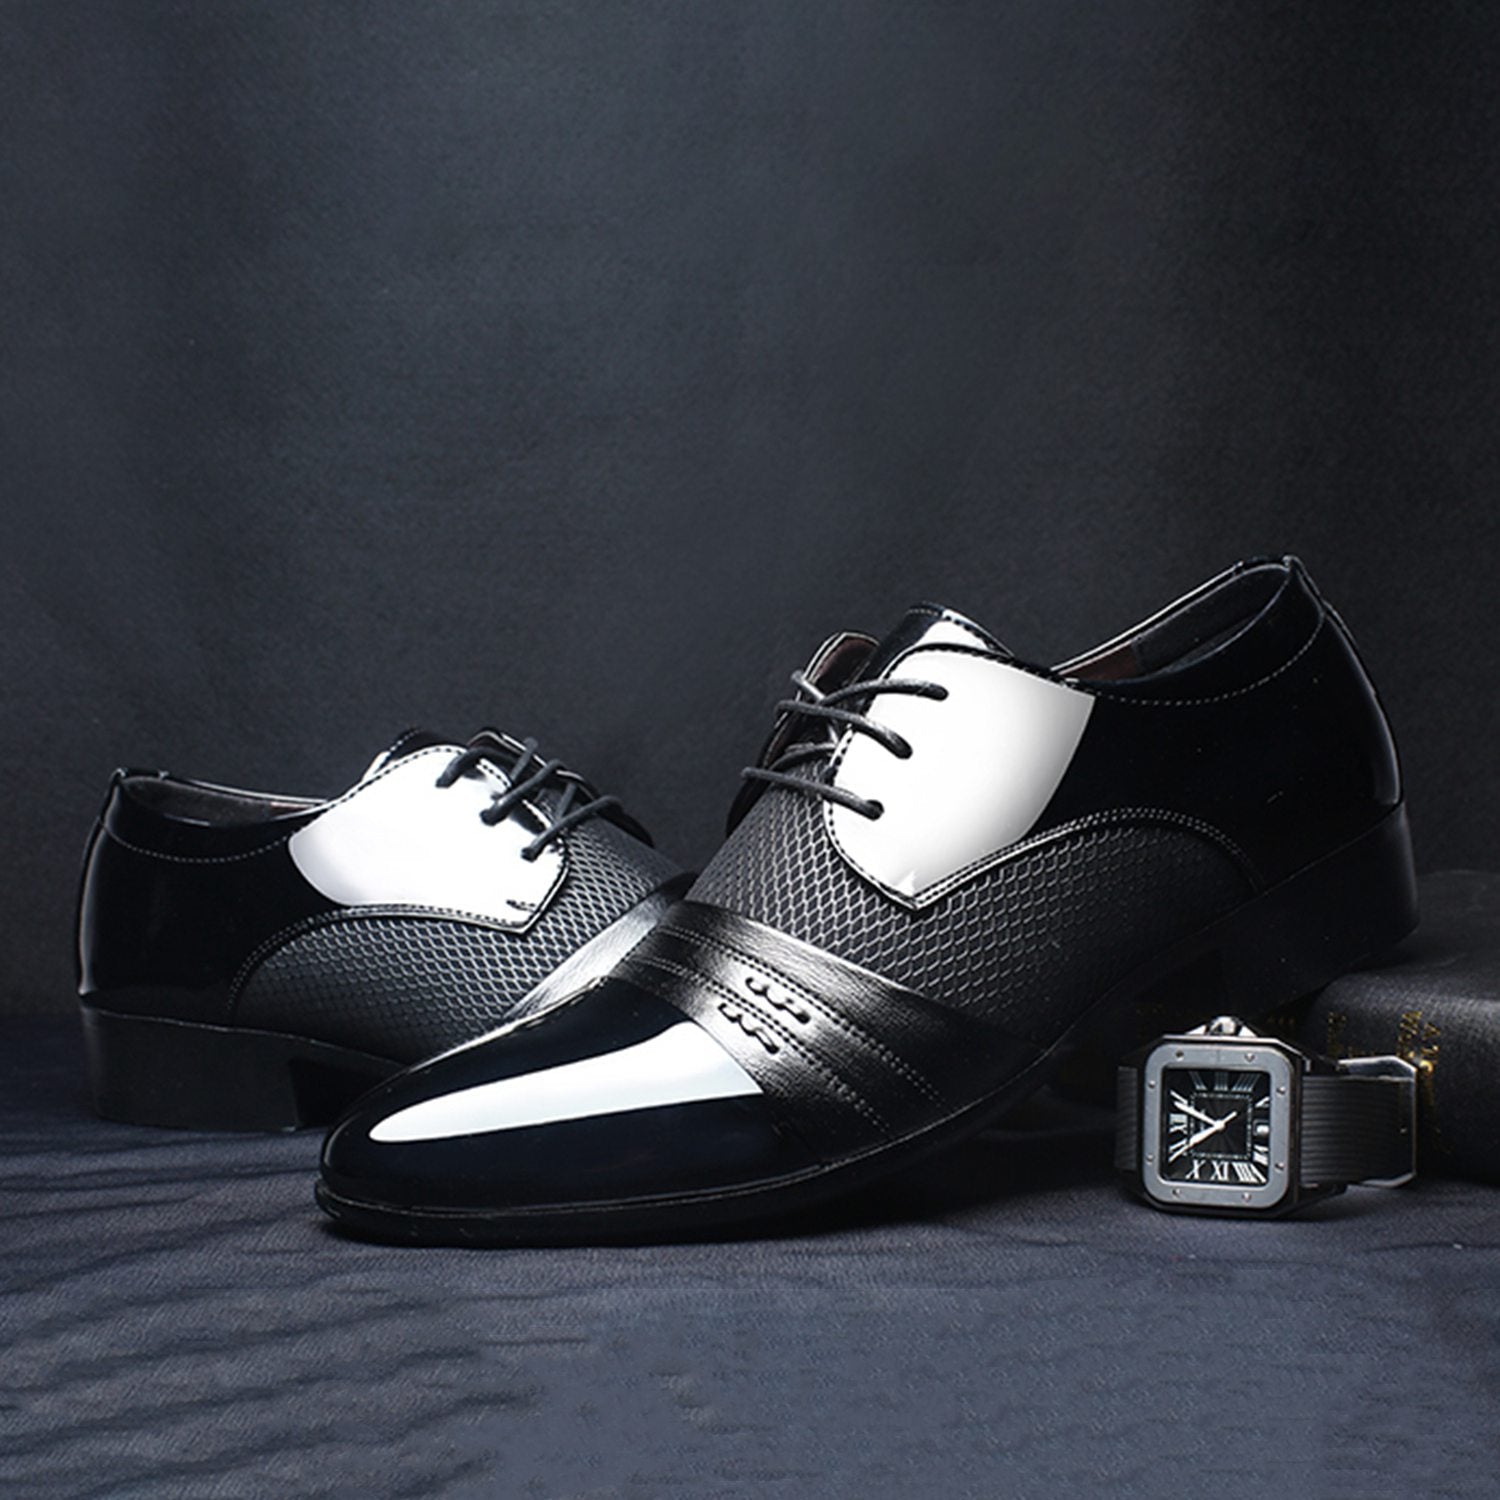 Classical Fashion Wedding Flats Shoes Men Dress Luxury Men'S Business Oxfords Casual Shoe Black / Brown Leather Derby Sho - ebowsos